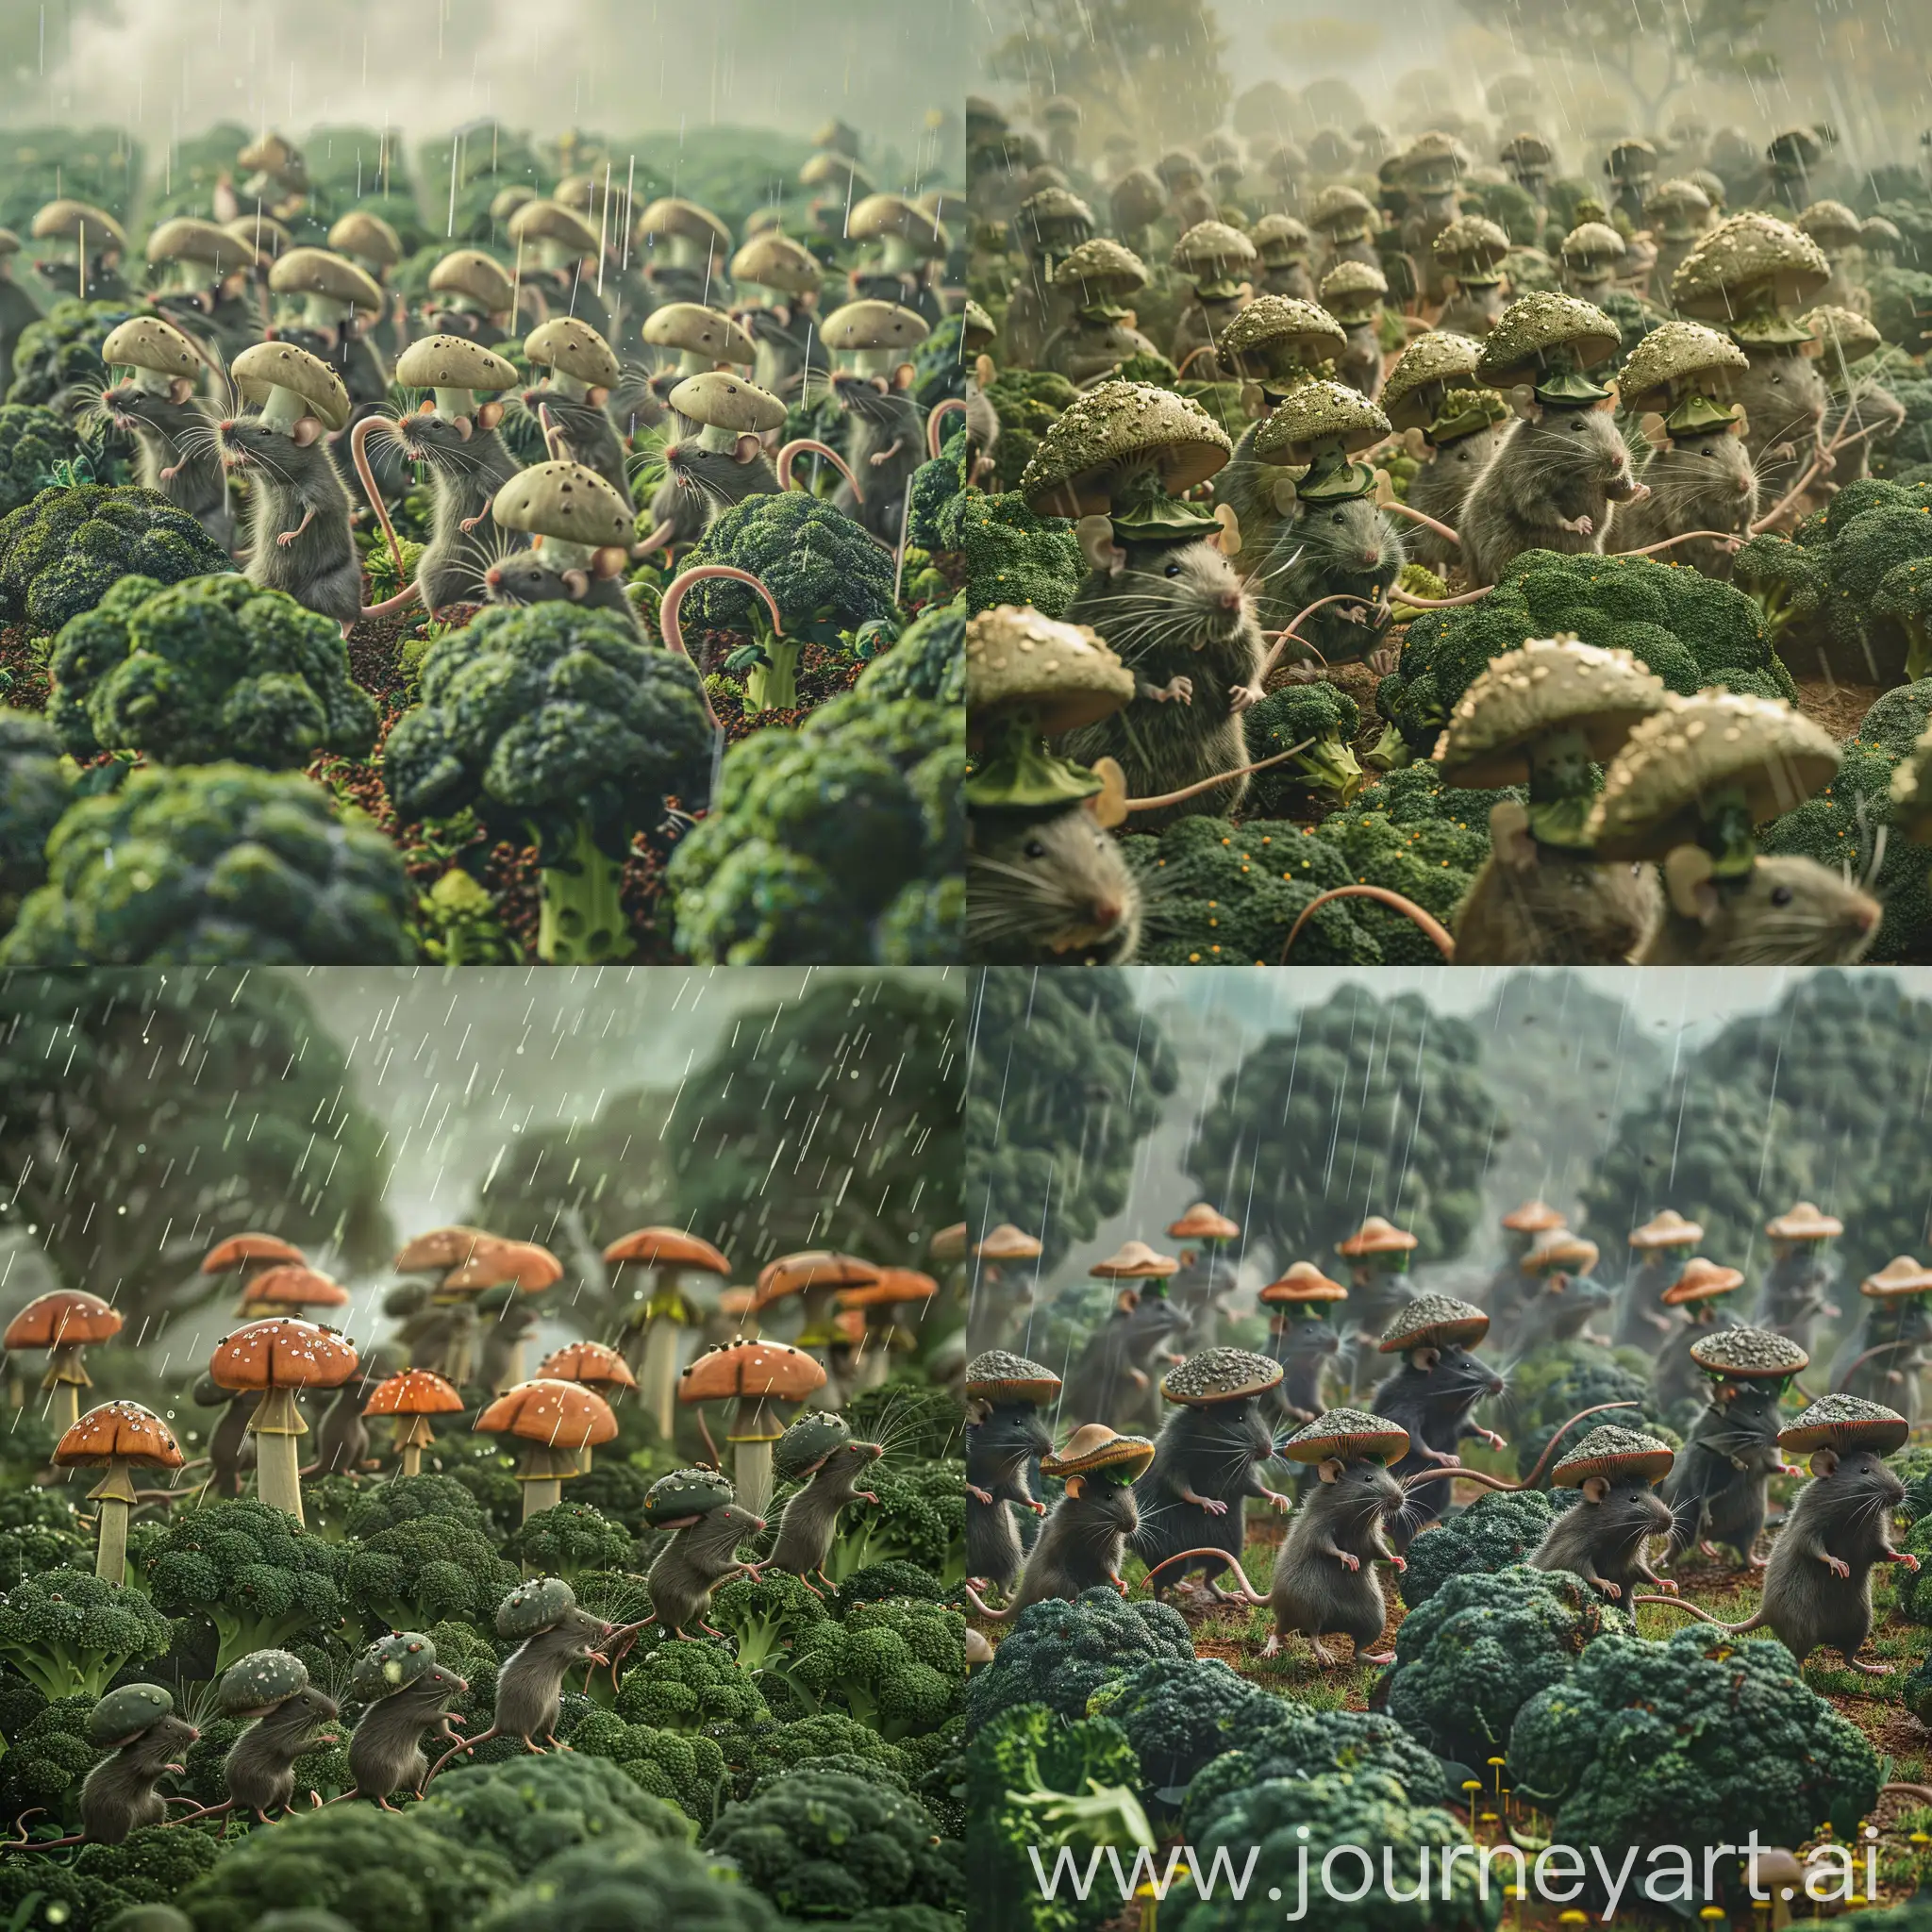 MushroomHelmeted-Rat-Army-Marching-Through-Broccoli-Field-Under-Chamomile-Rain